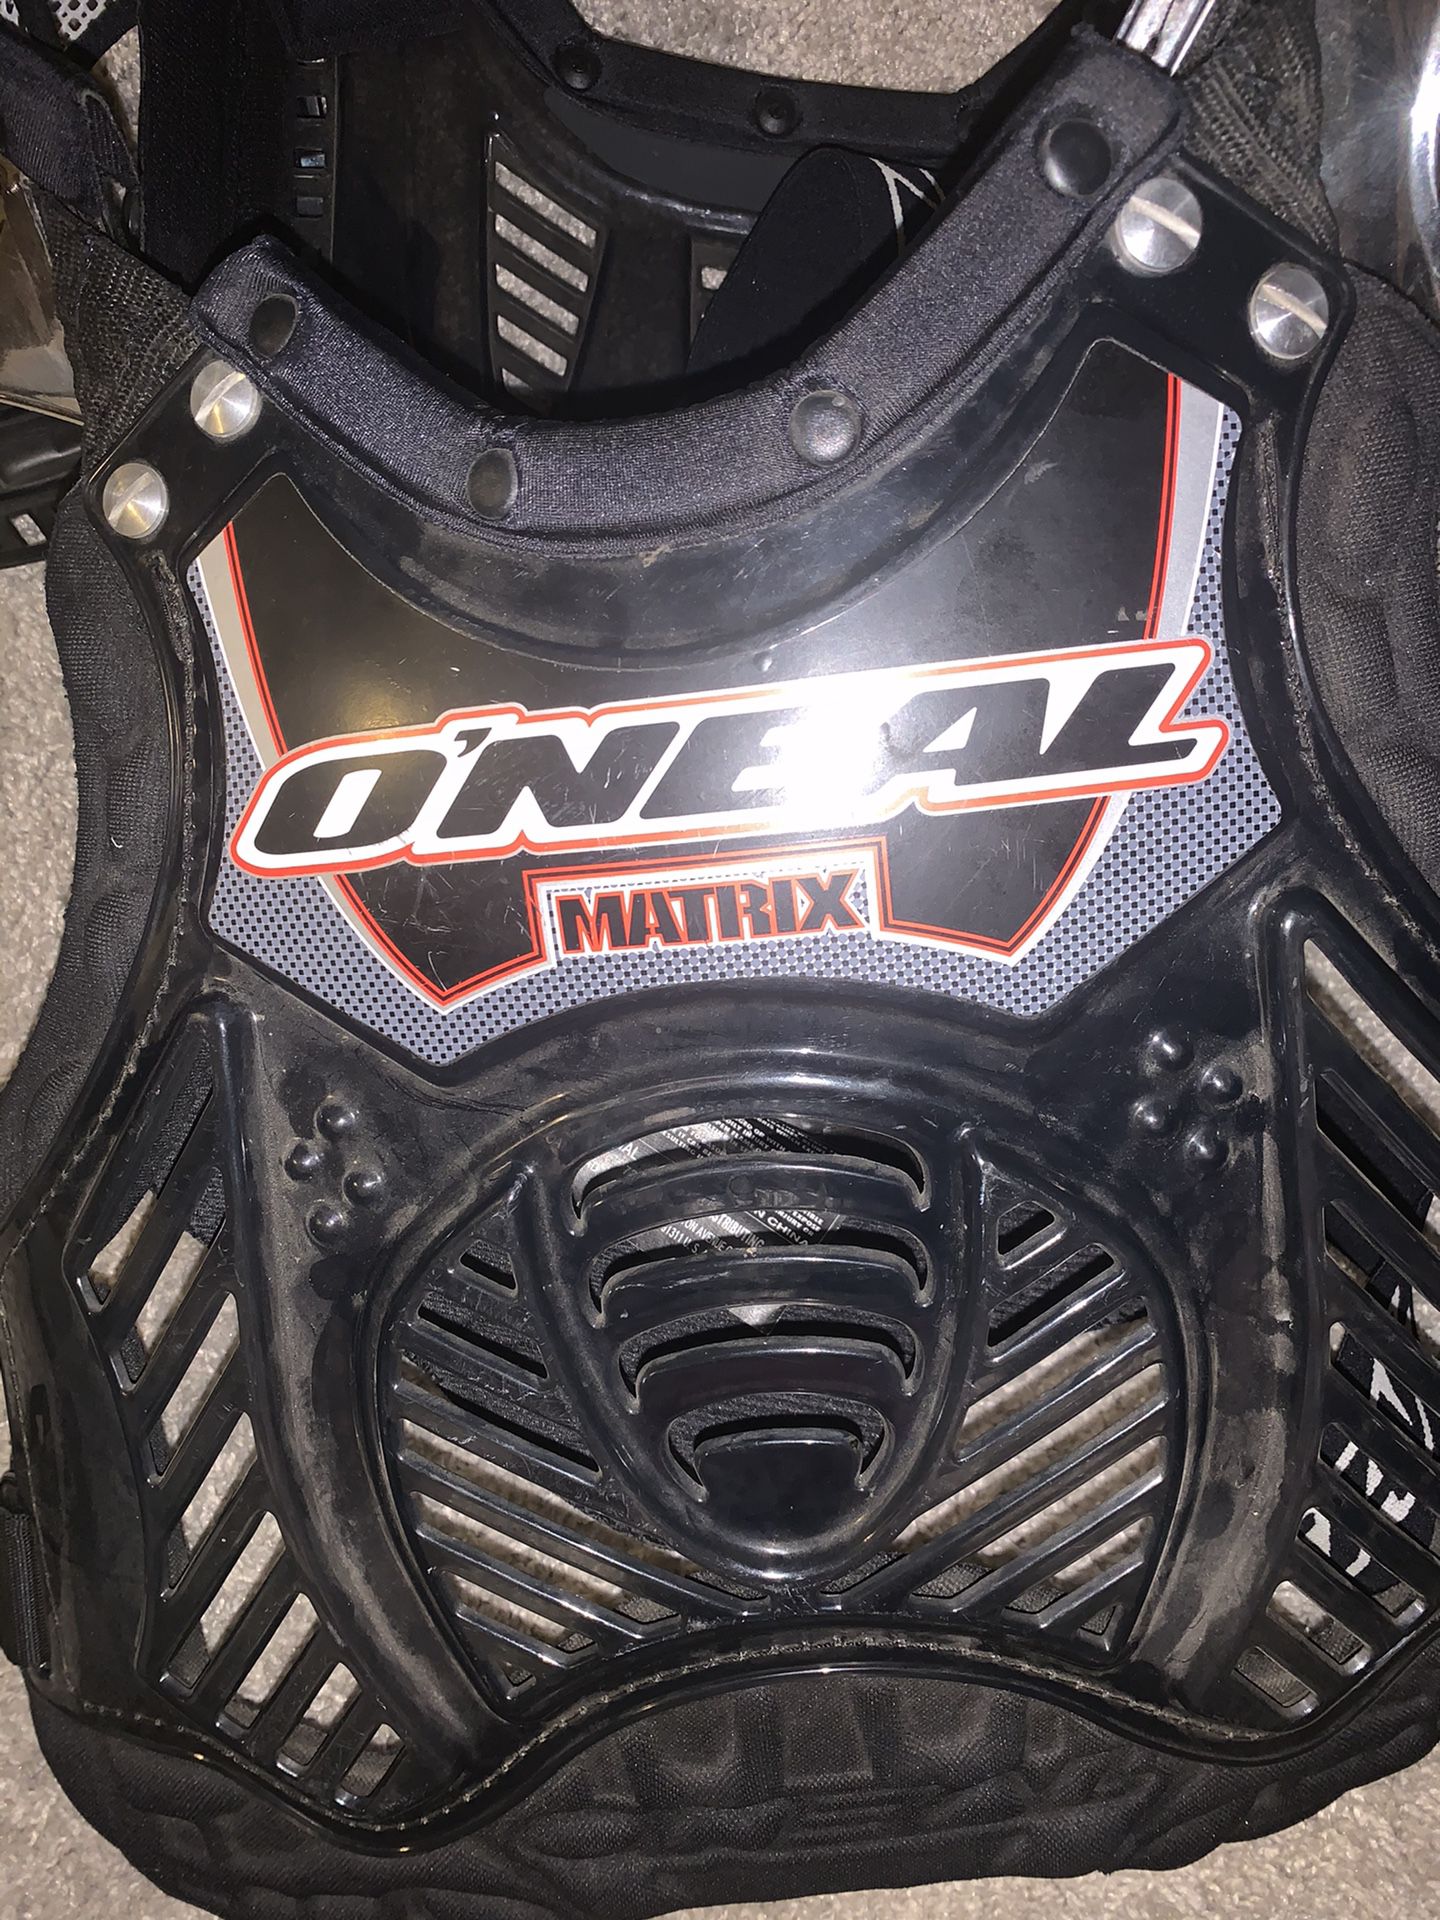 O’neal matrix bike and motocross protective gear